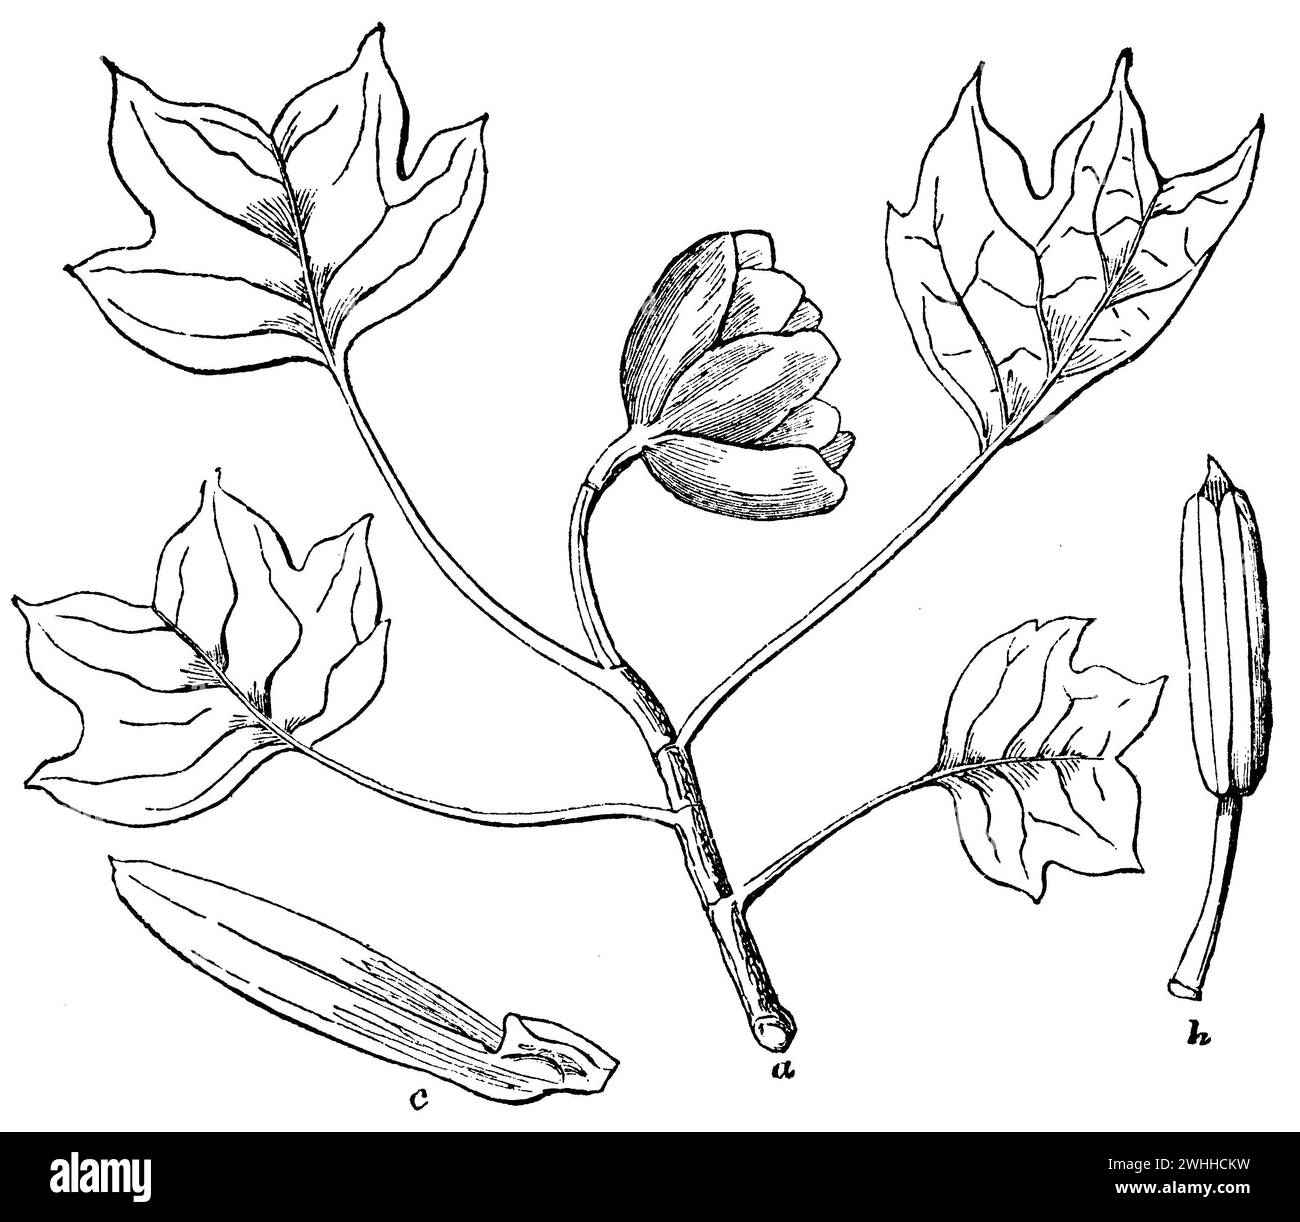 tulip poplar, a) flower branch, b) stamen, c) carpel (fruitlet), Liriodendron tulipifera,  (encyclopedia, 1893), Tulpenbaum, a) Blütenzweig, b) Staubgefäß, c) Karpell (Früchtchen), Tulipier de Virginie, a) rameau floral, b) étamine, c) carpelle (fruit) Stock Photo